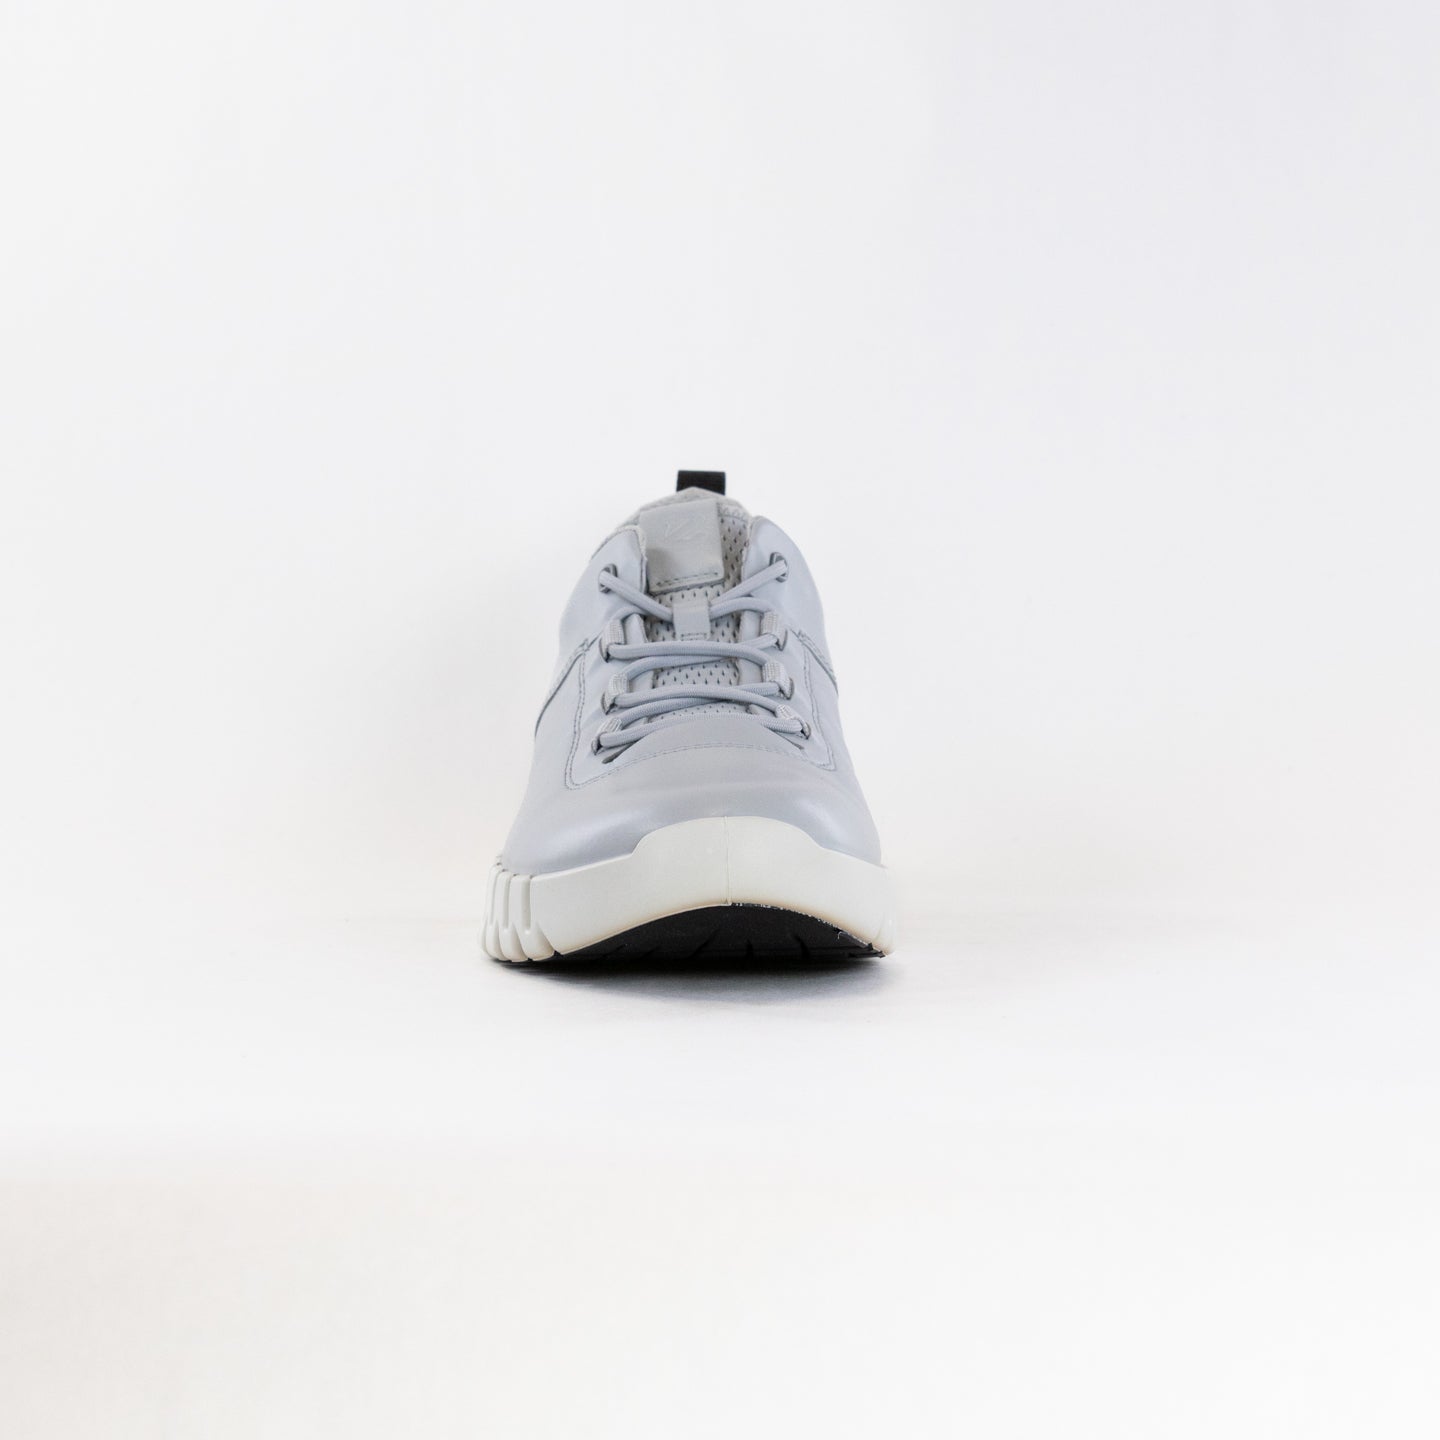 ECCO Gruuv Sneaker (Men's) - Concrete/Concrete